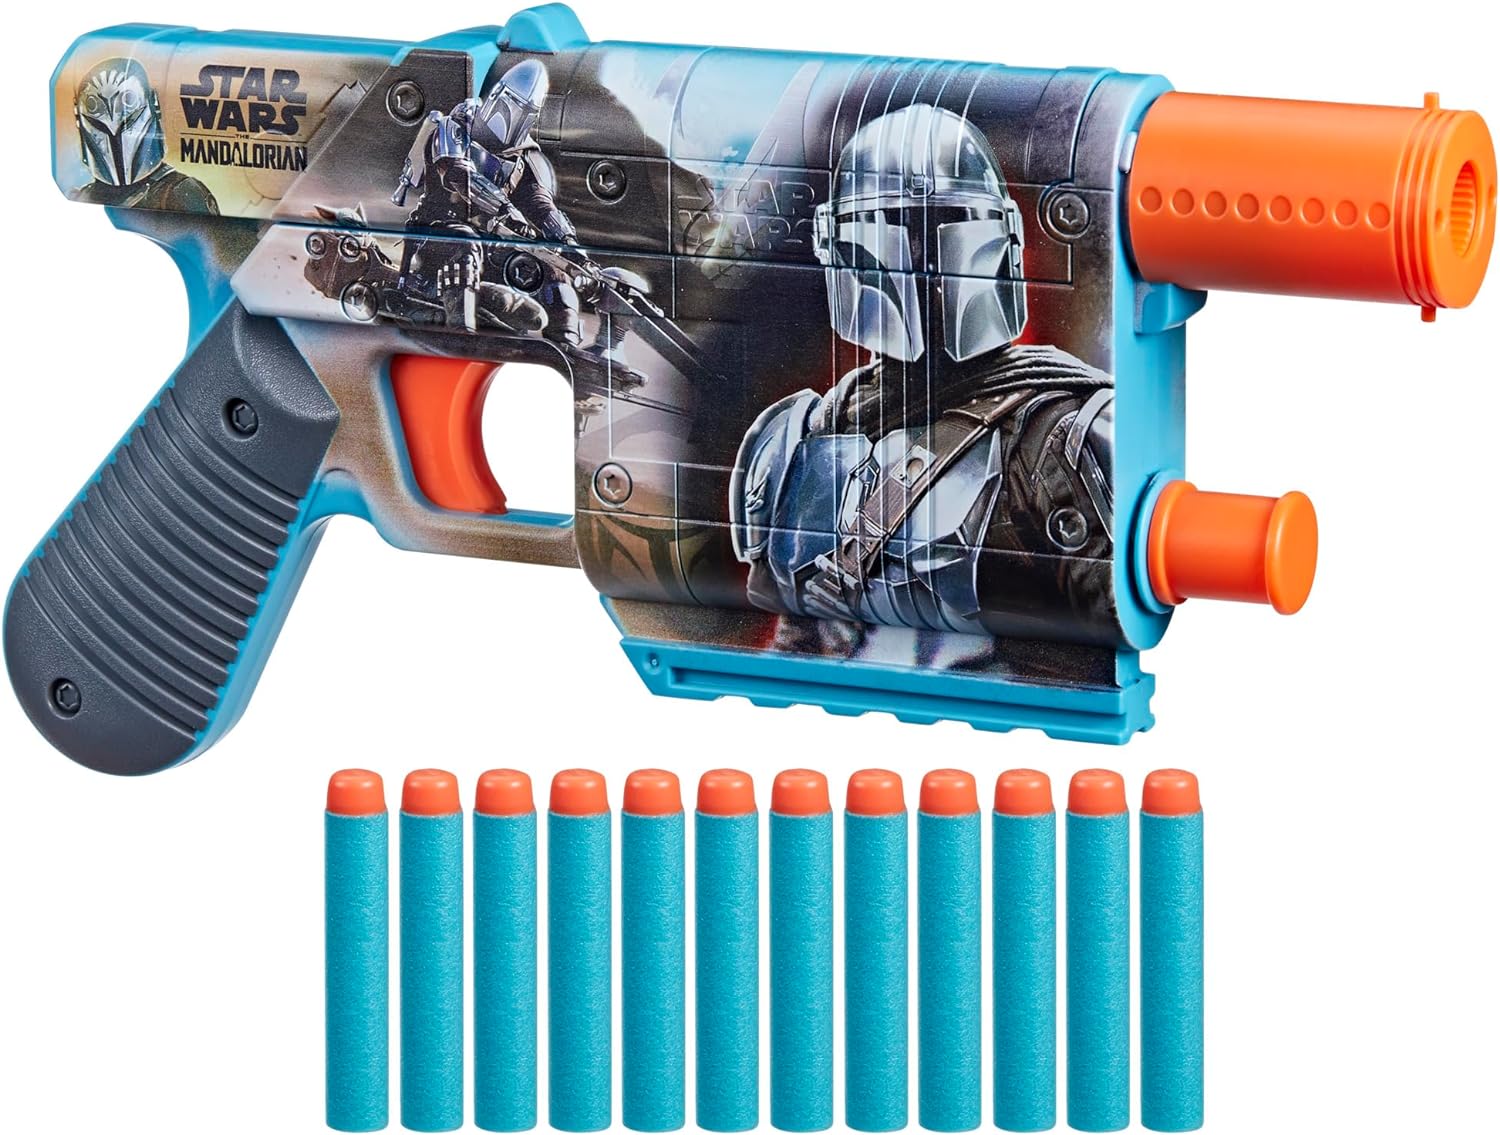 NERF Star Wars The Mandalorian Dart Blaster, 12 Elite Darts, Internal Clip, Toy Foam Blasters for 8 Year Old Boys & Girls & Up